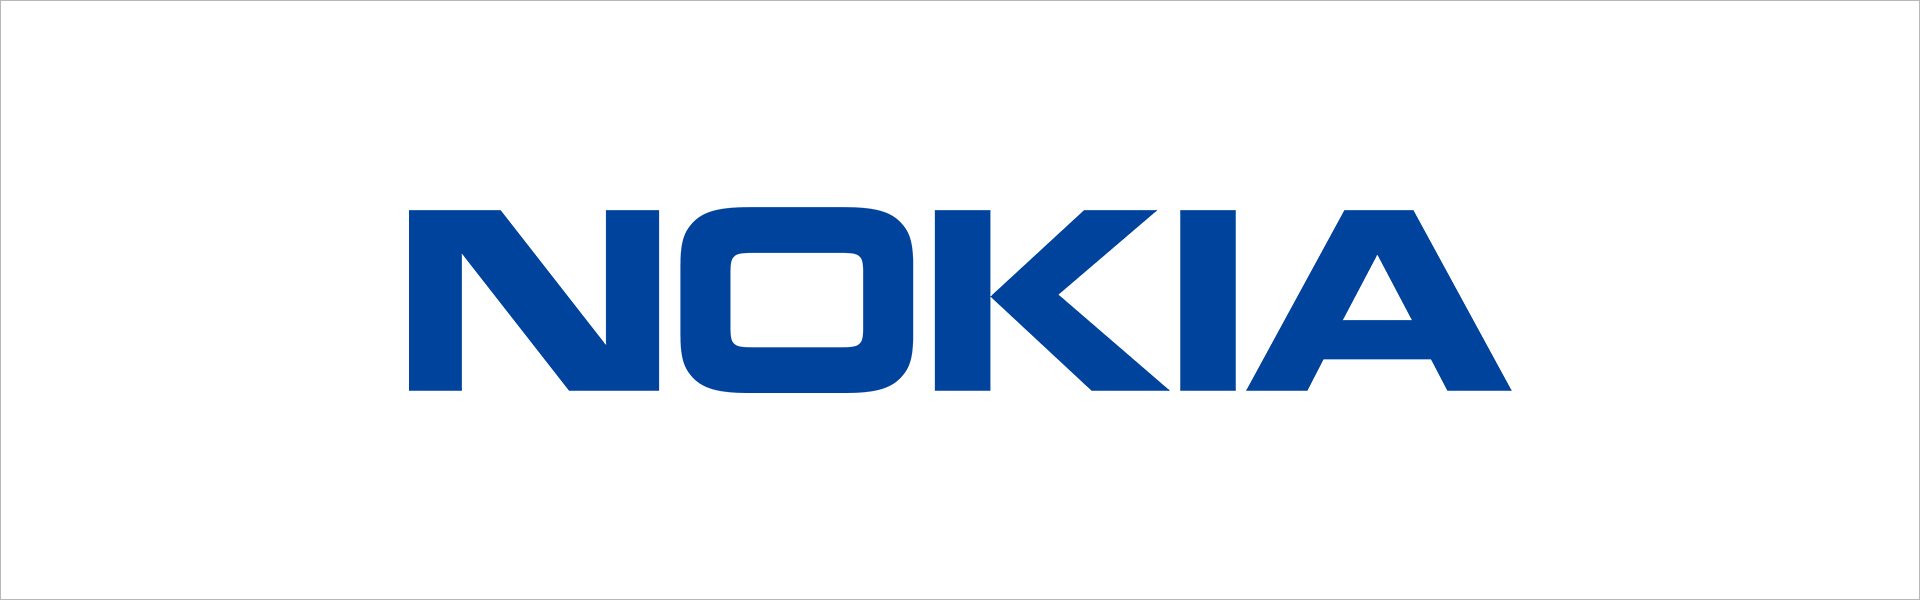 Nokia 3310 (2017), Dual SIM, (LT, LV, EE) Dark Blue Nokia